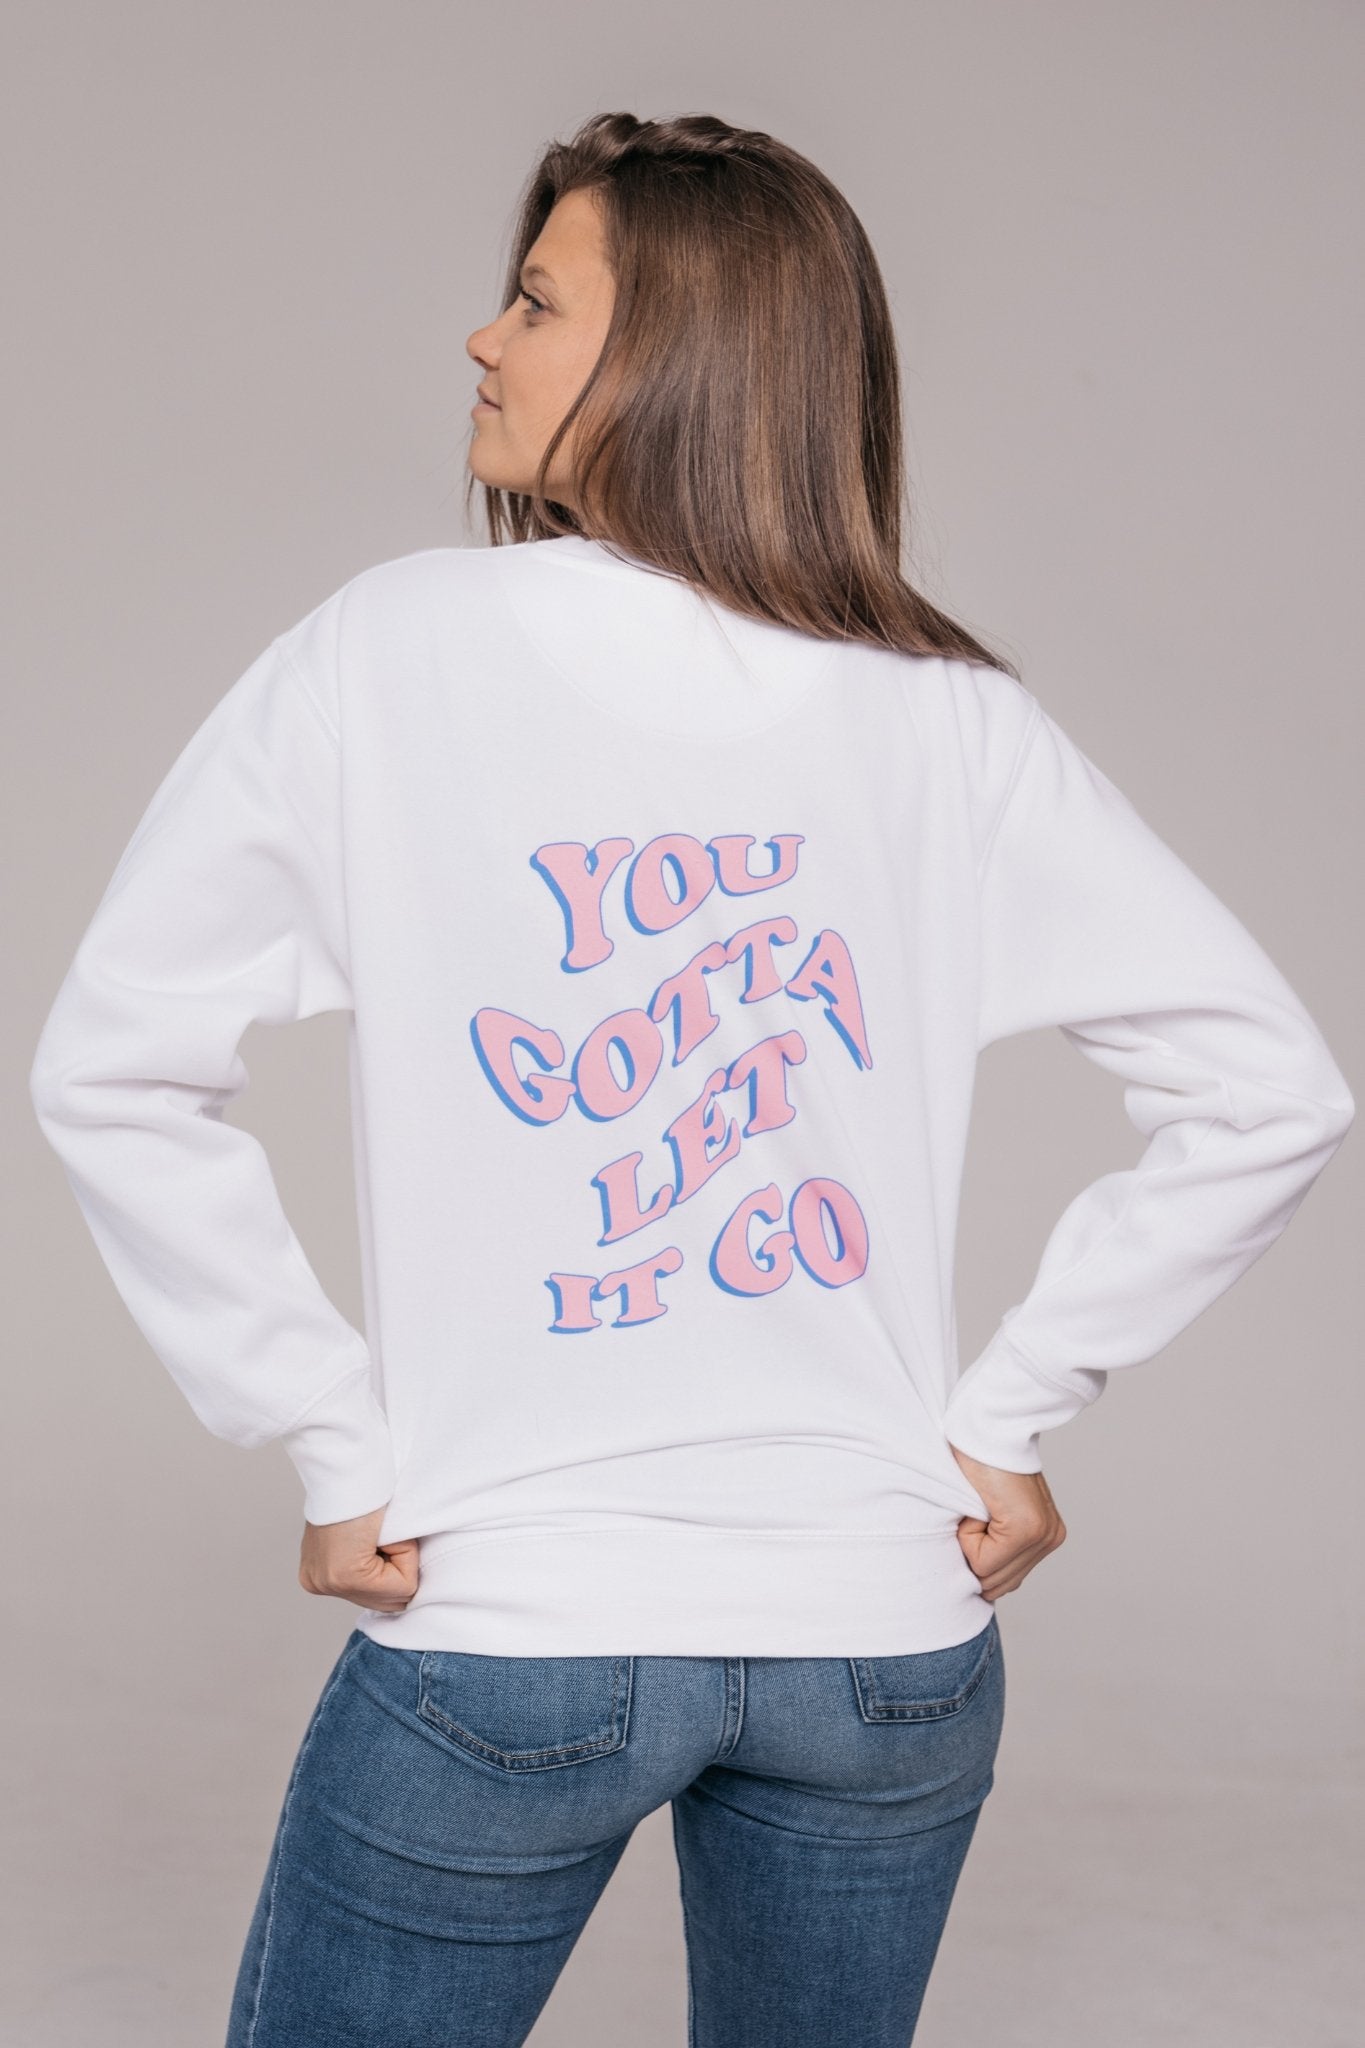 You Gotta Let It Go Sweatshirt - Shirts & Tops